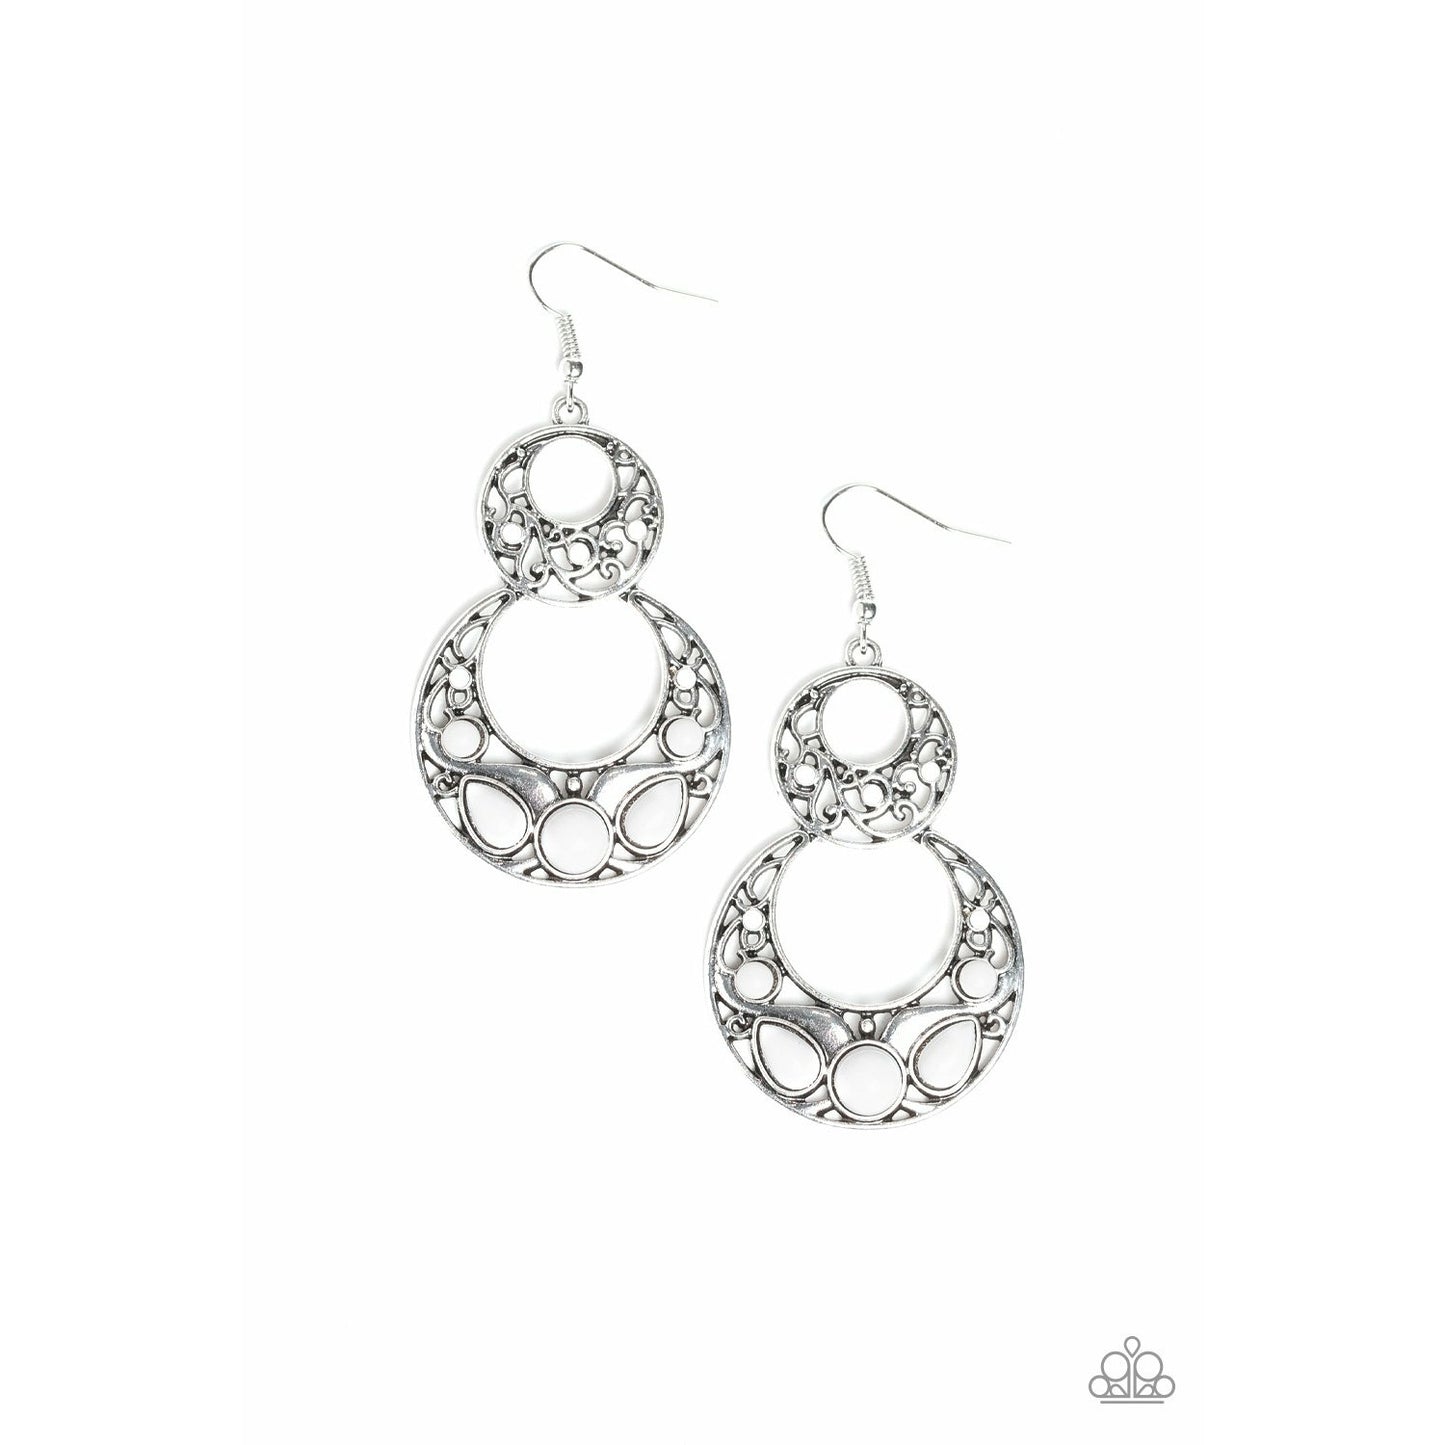 West Coast Whimsical - White earrings